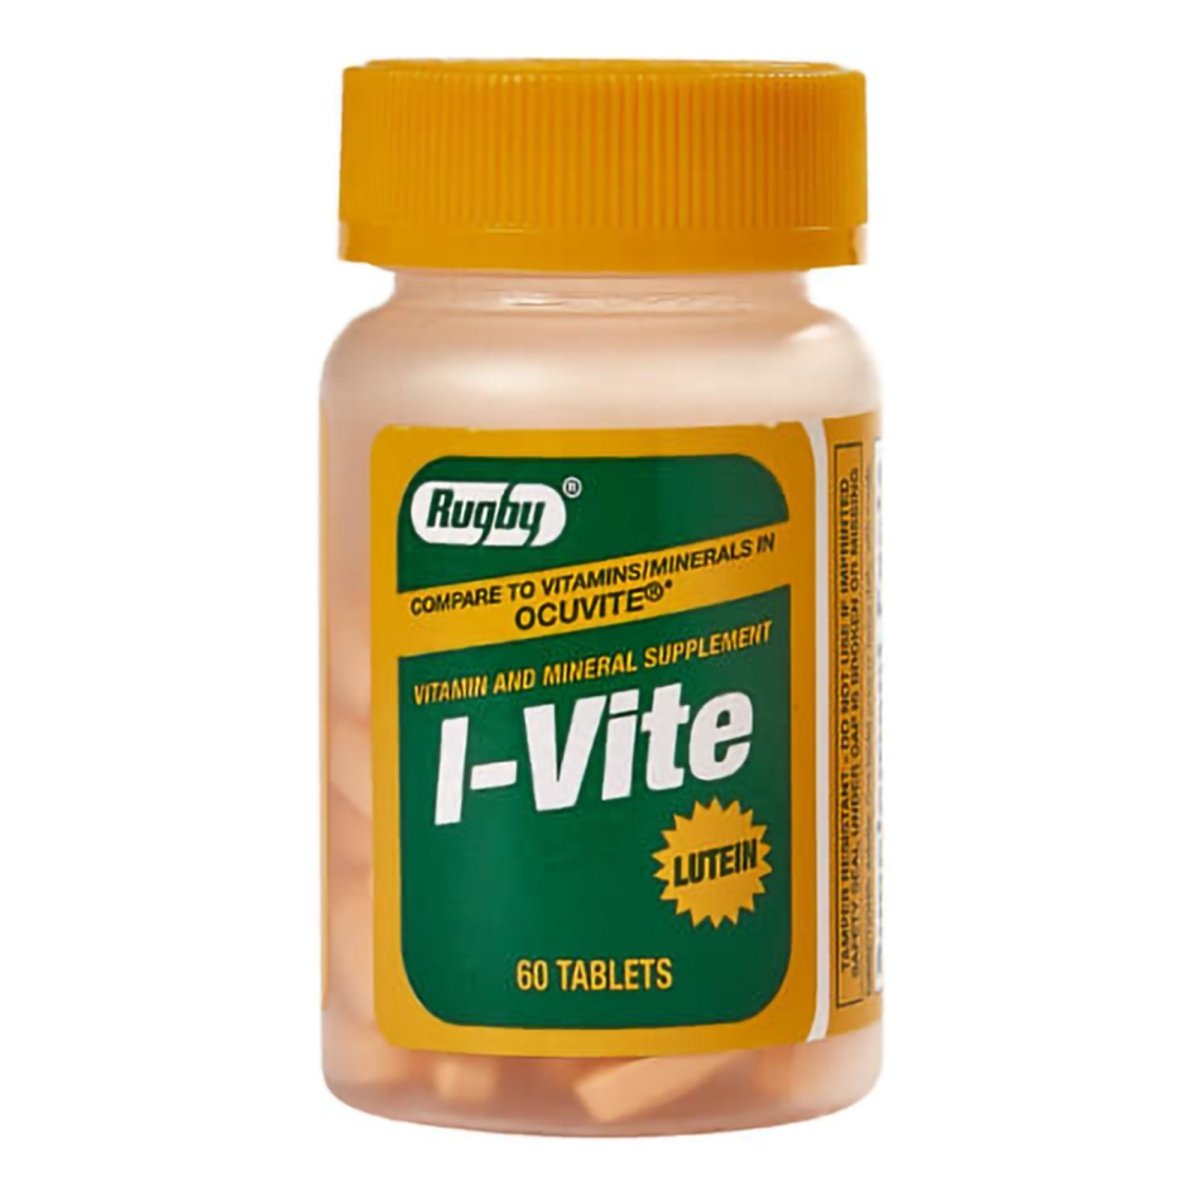 I Vite Vitamin And Mineral Supplement - 844533_BT - 1